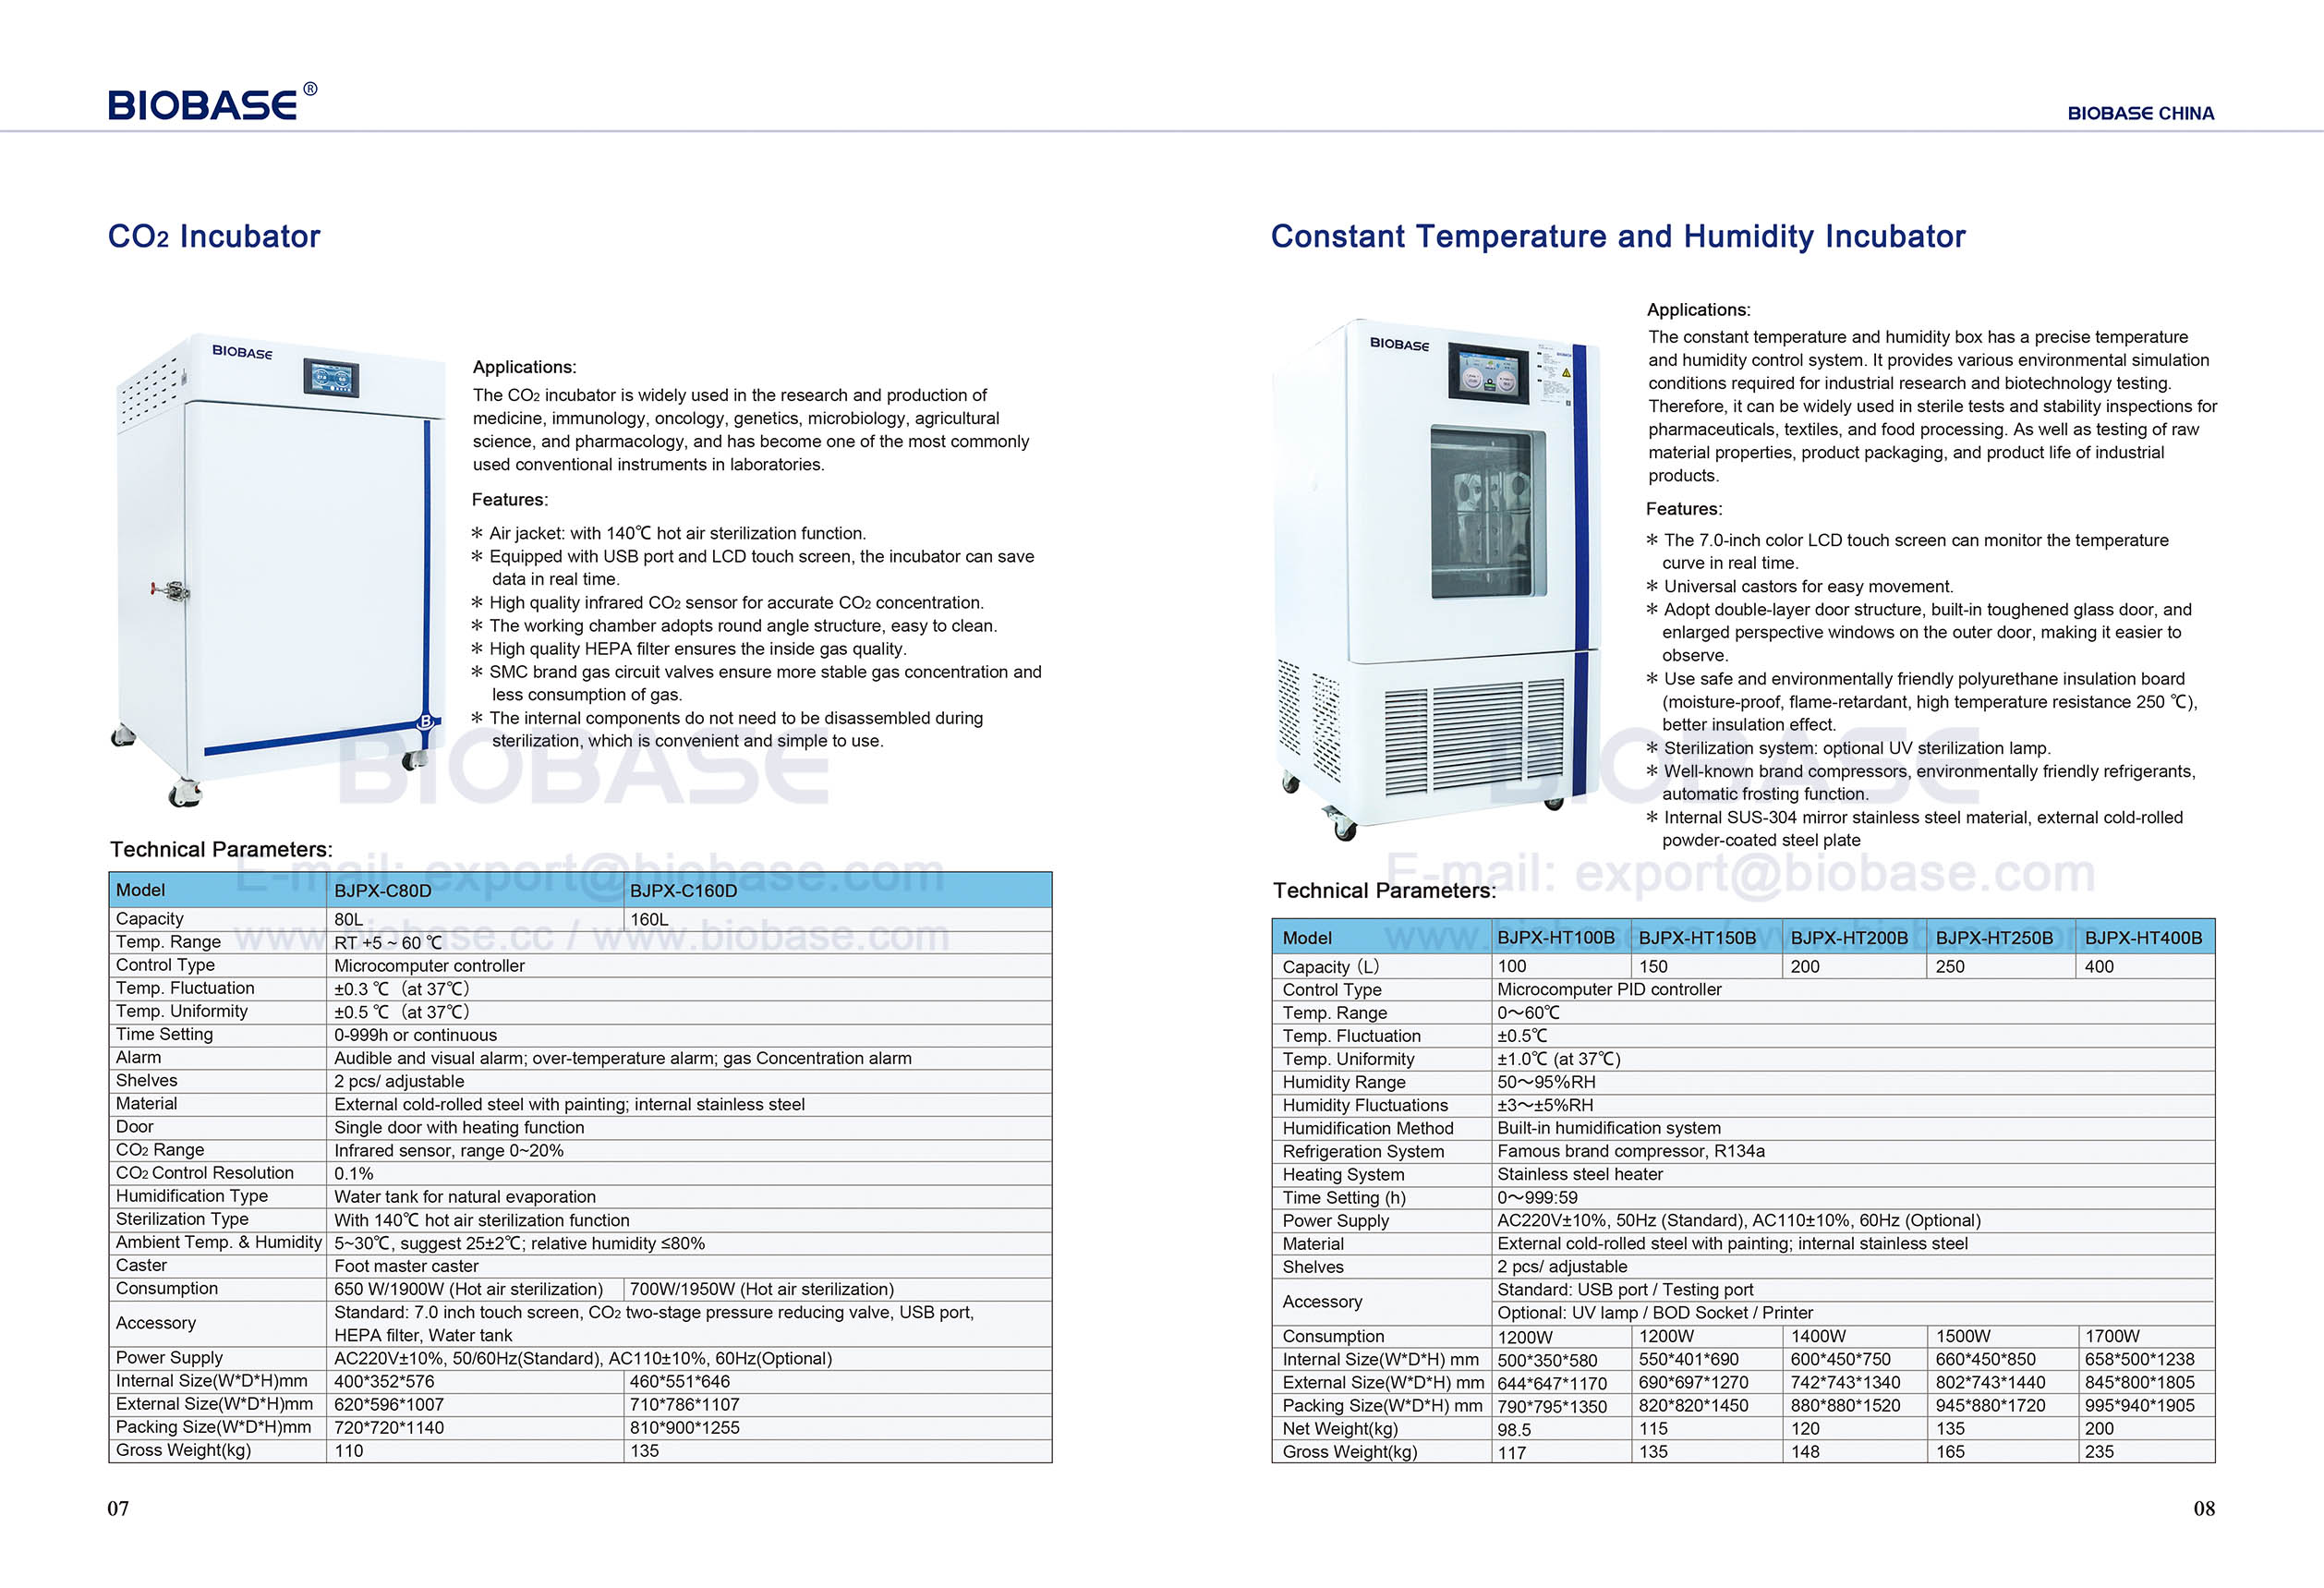 7-8 CO2 Incubator & Constant Temperature and Humidity Incubator